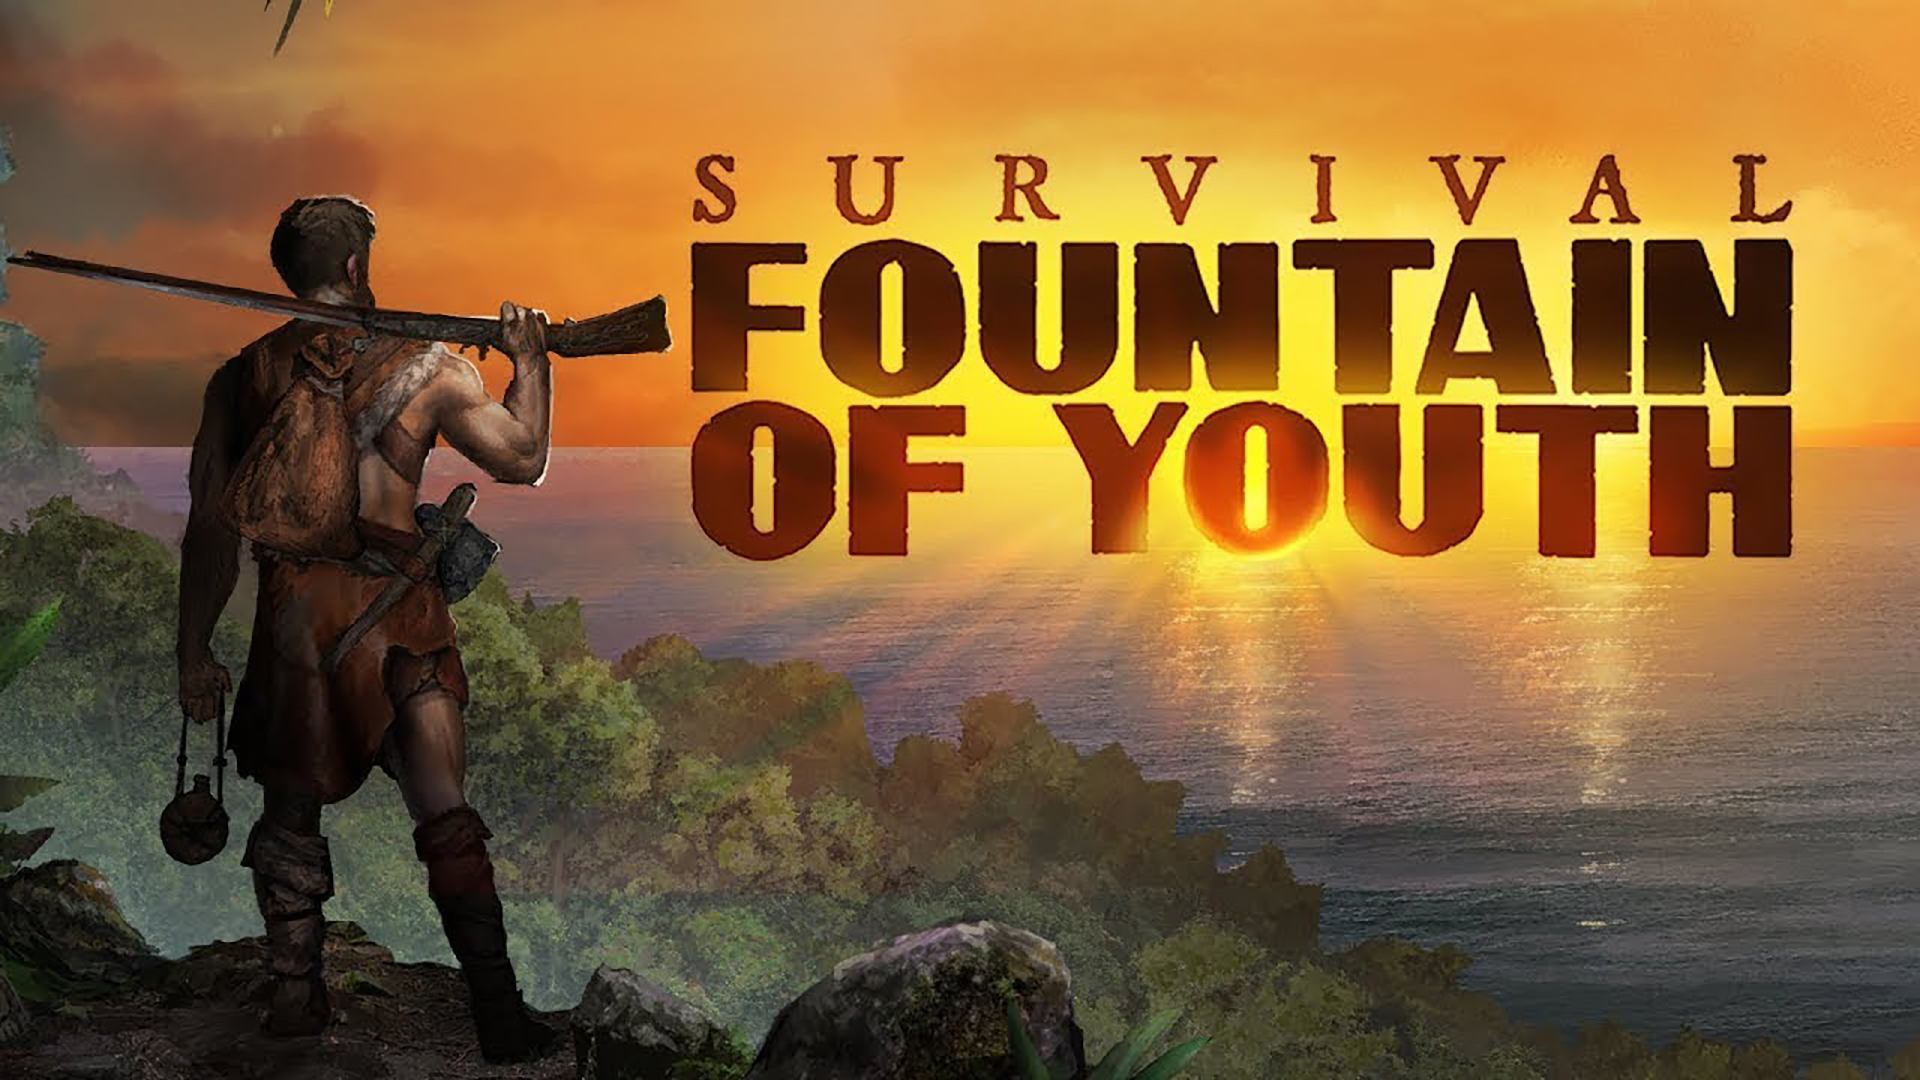 Survival Fountain of Youth (15) Релиз игры - Вот и финал